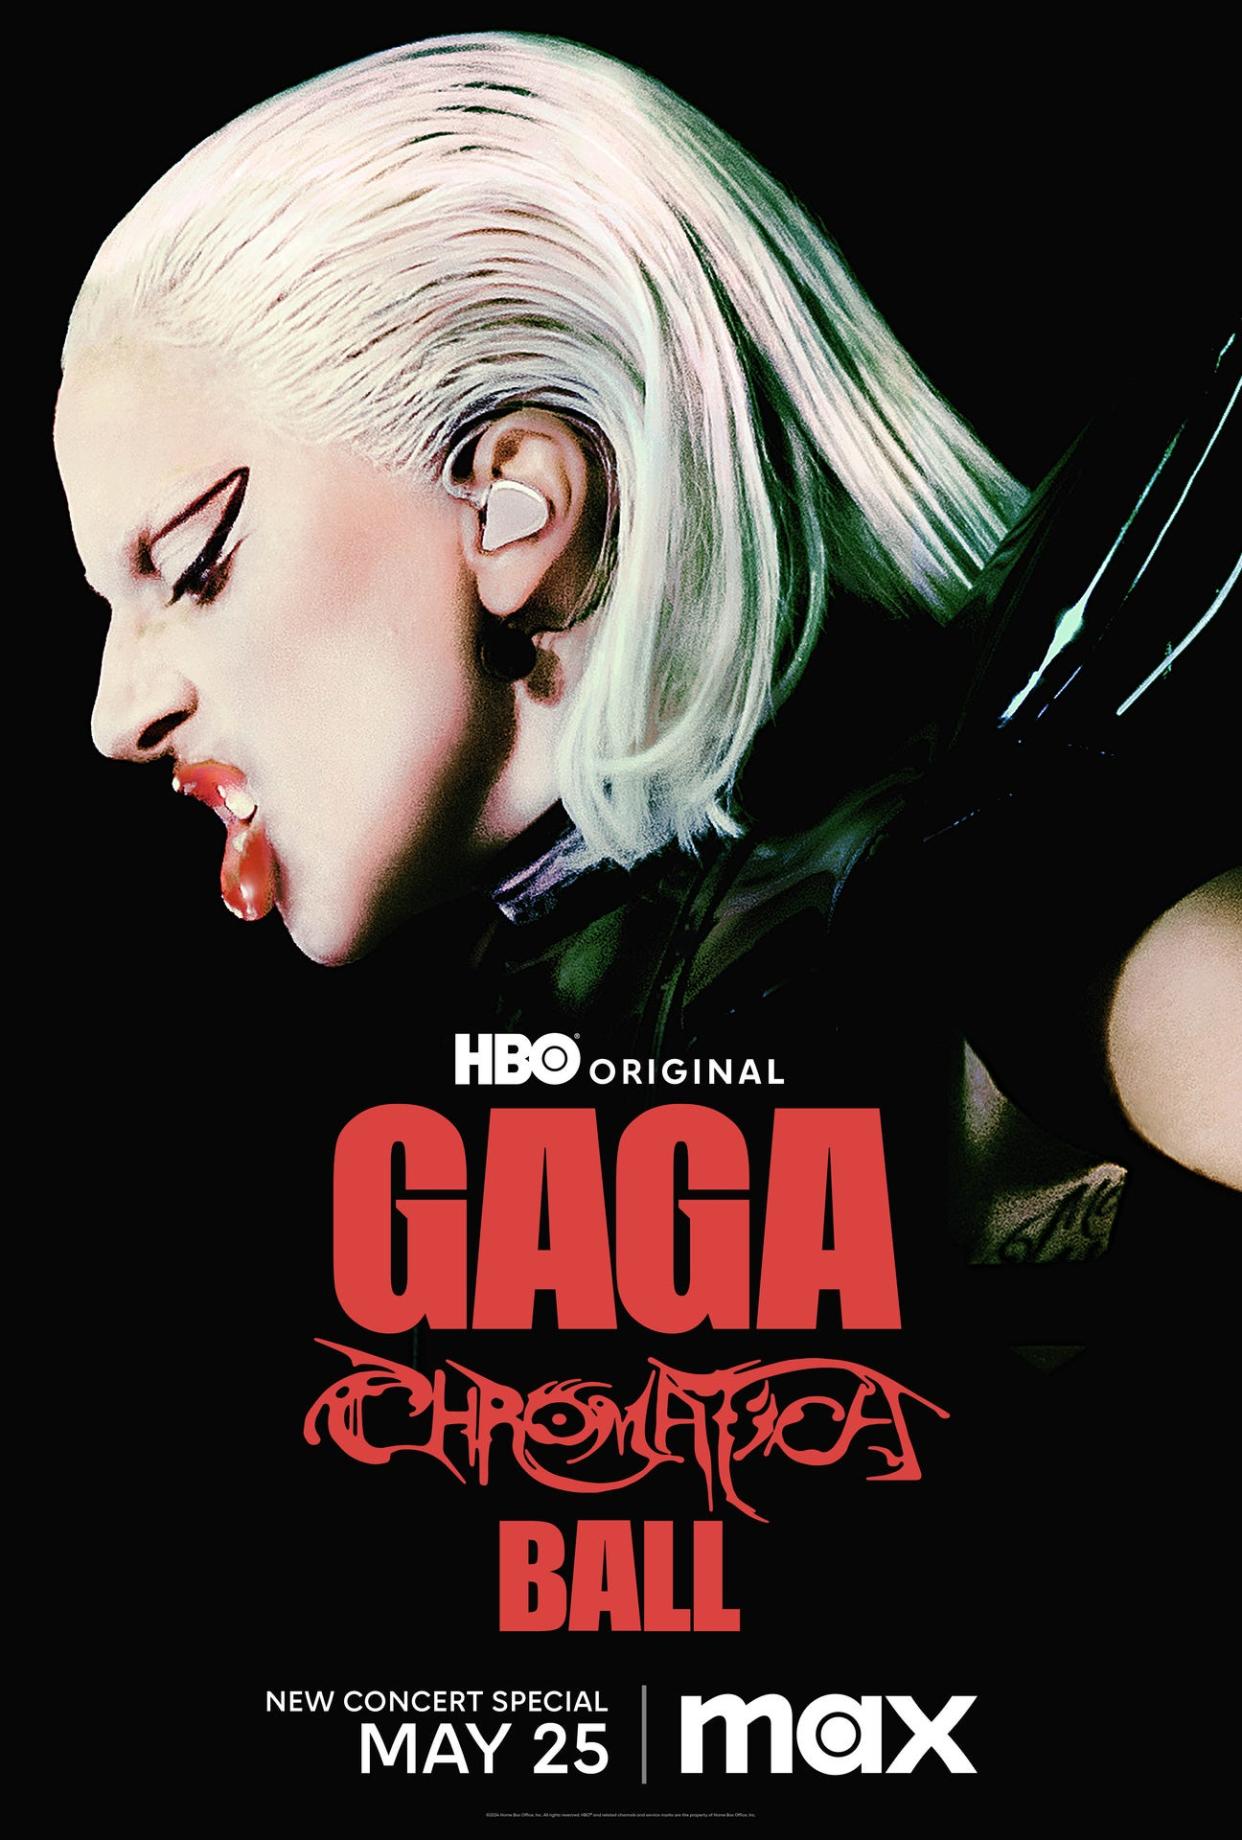 Lady Gaga "Chromatica Ball" concert film poster